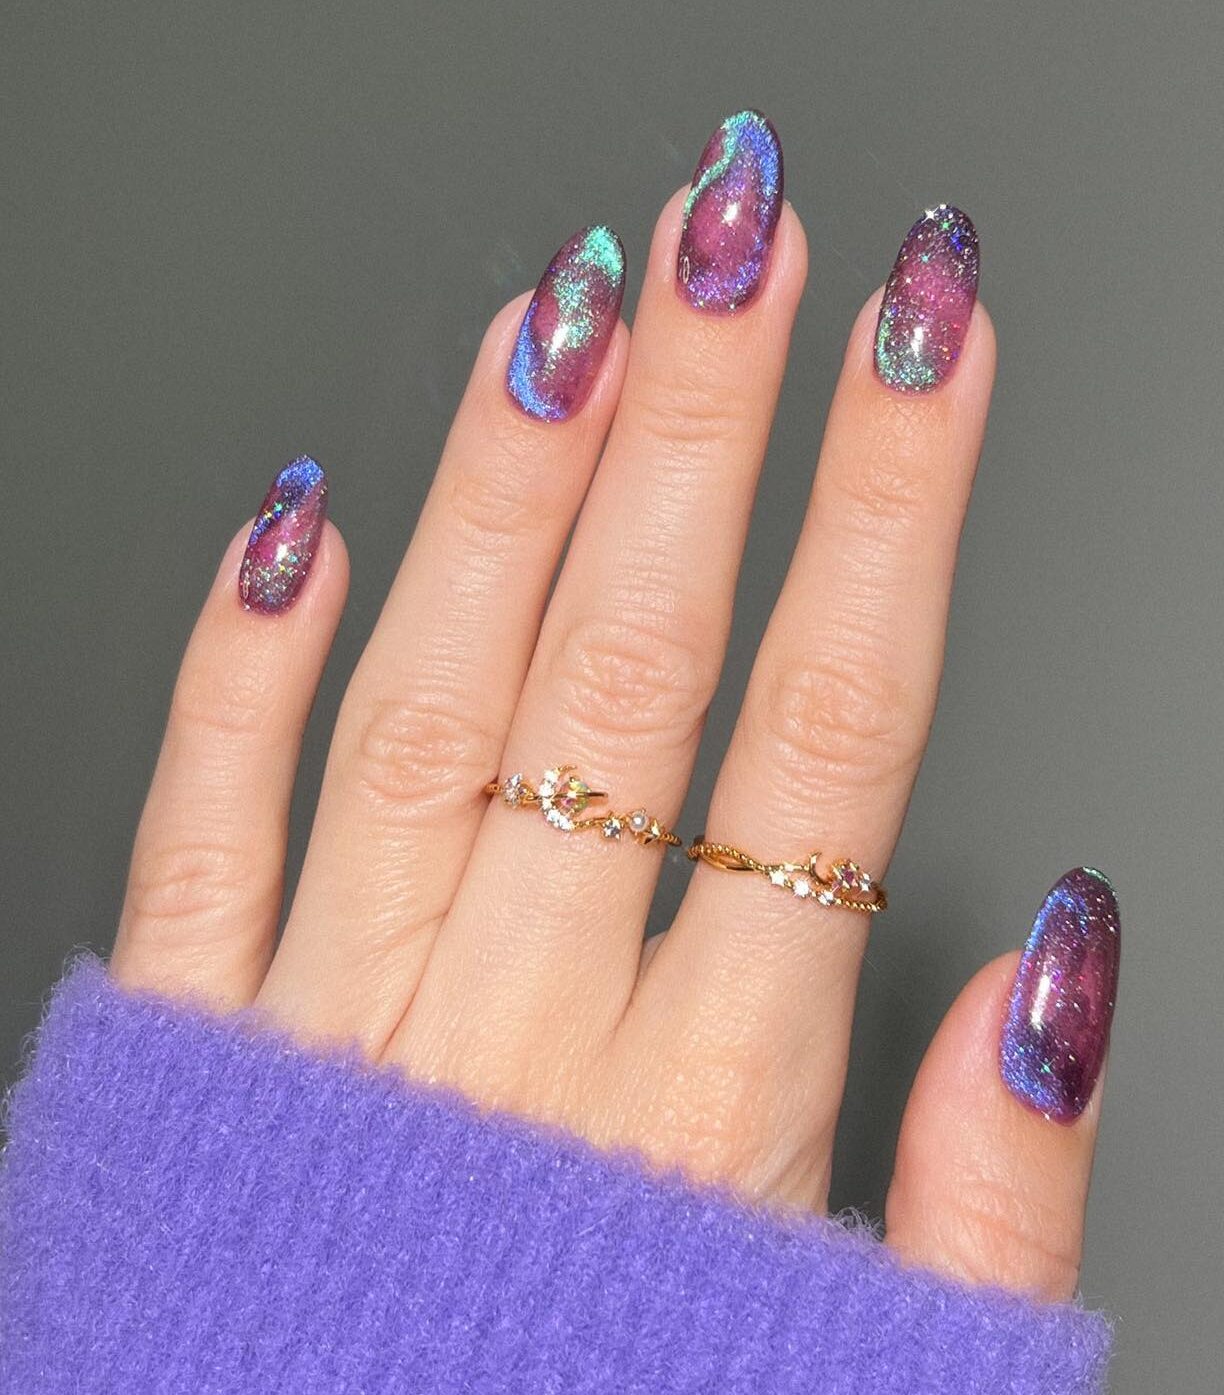 Chrome purple galaxy-inspired nail art on medium round nails